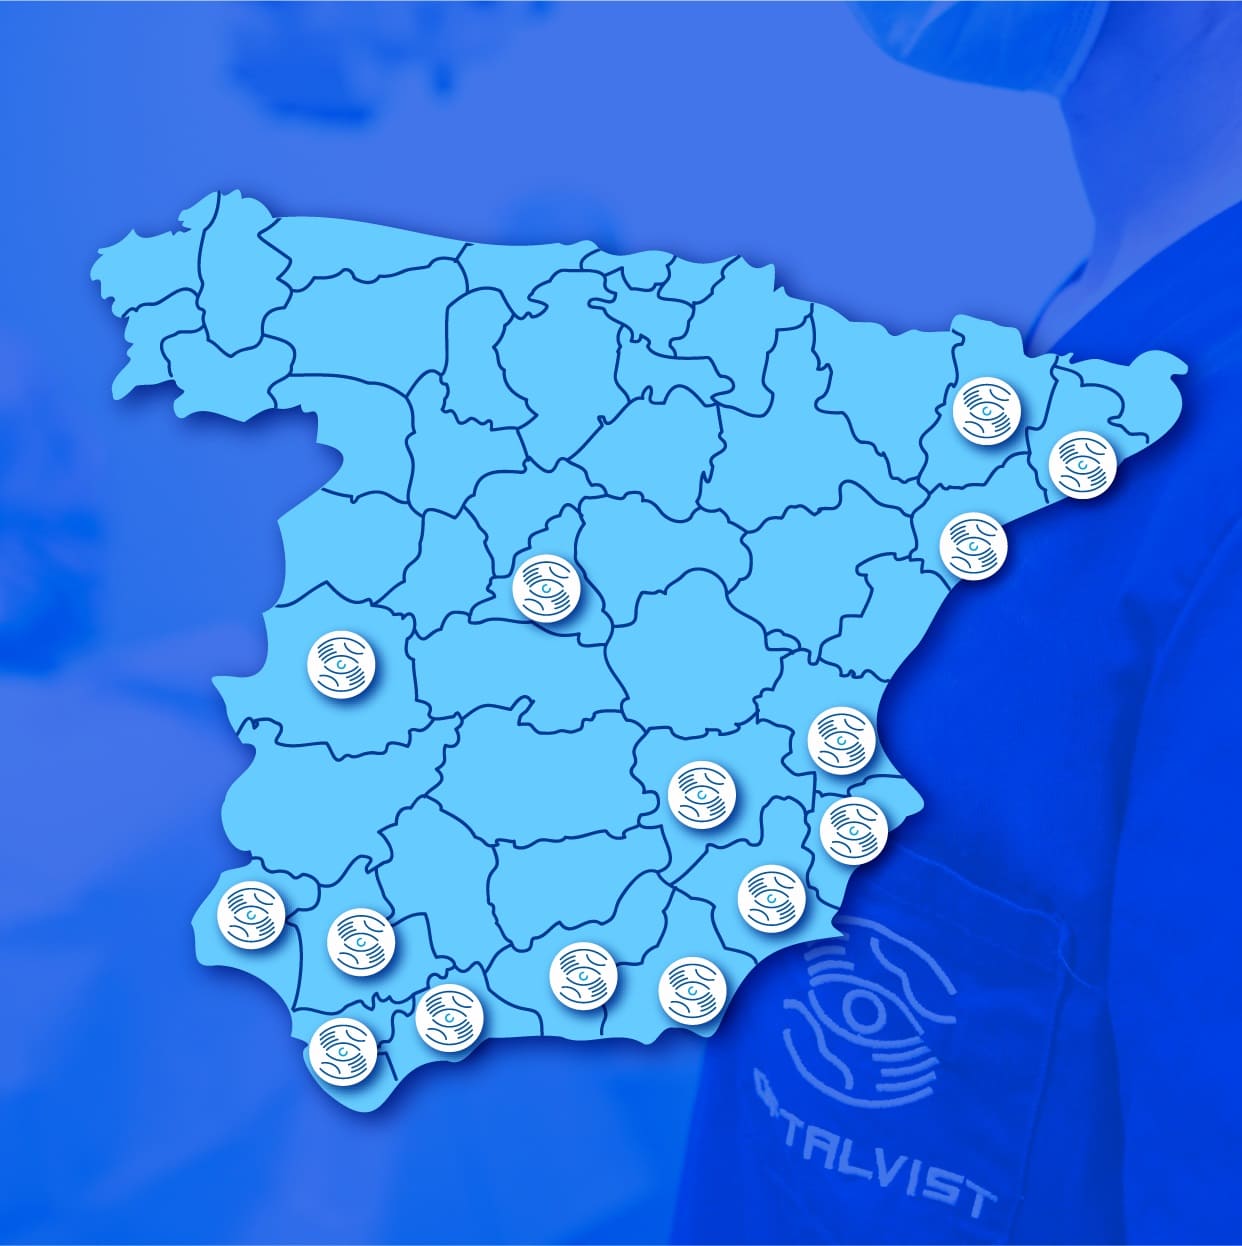 mapa oftalvist espanya mobil